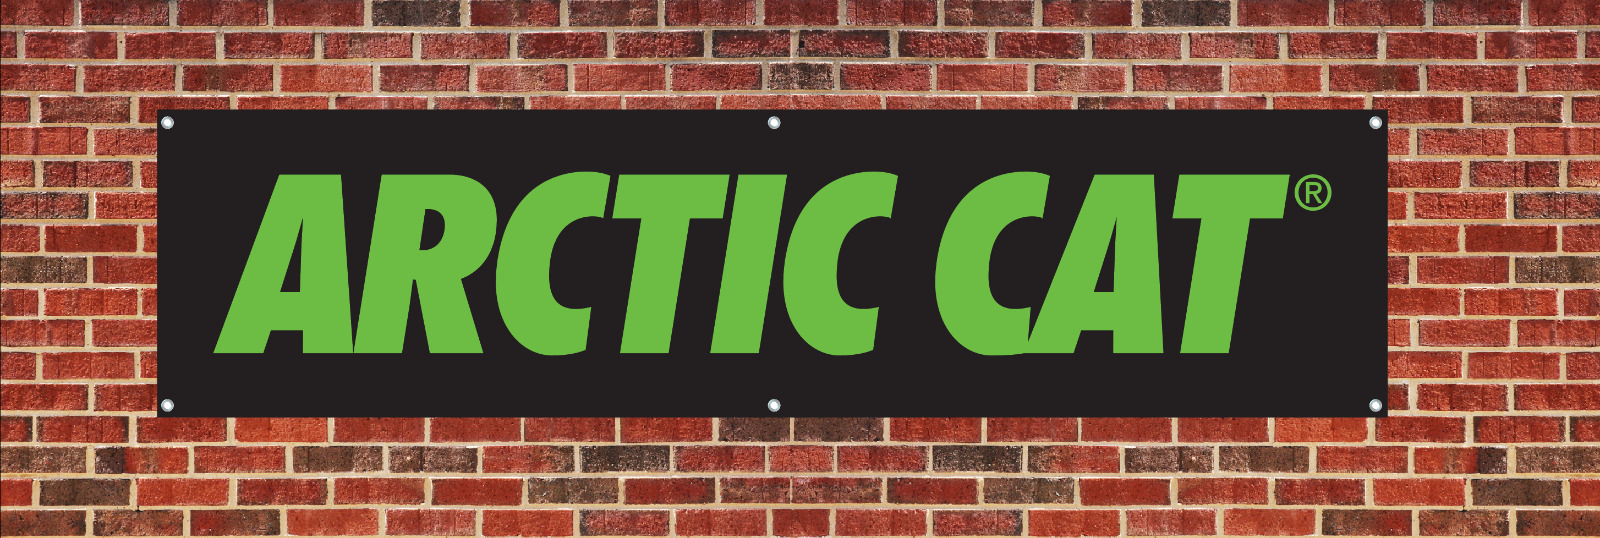 Arctic Cat Banner Poster dealer advertising sign Man Cave Garage 2' x 7' NEW